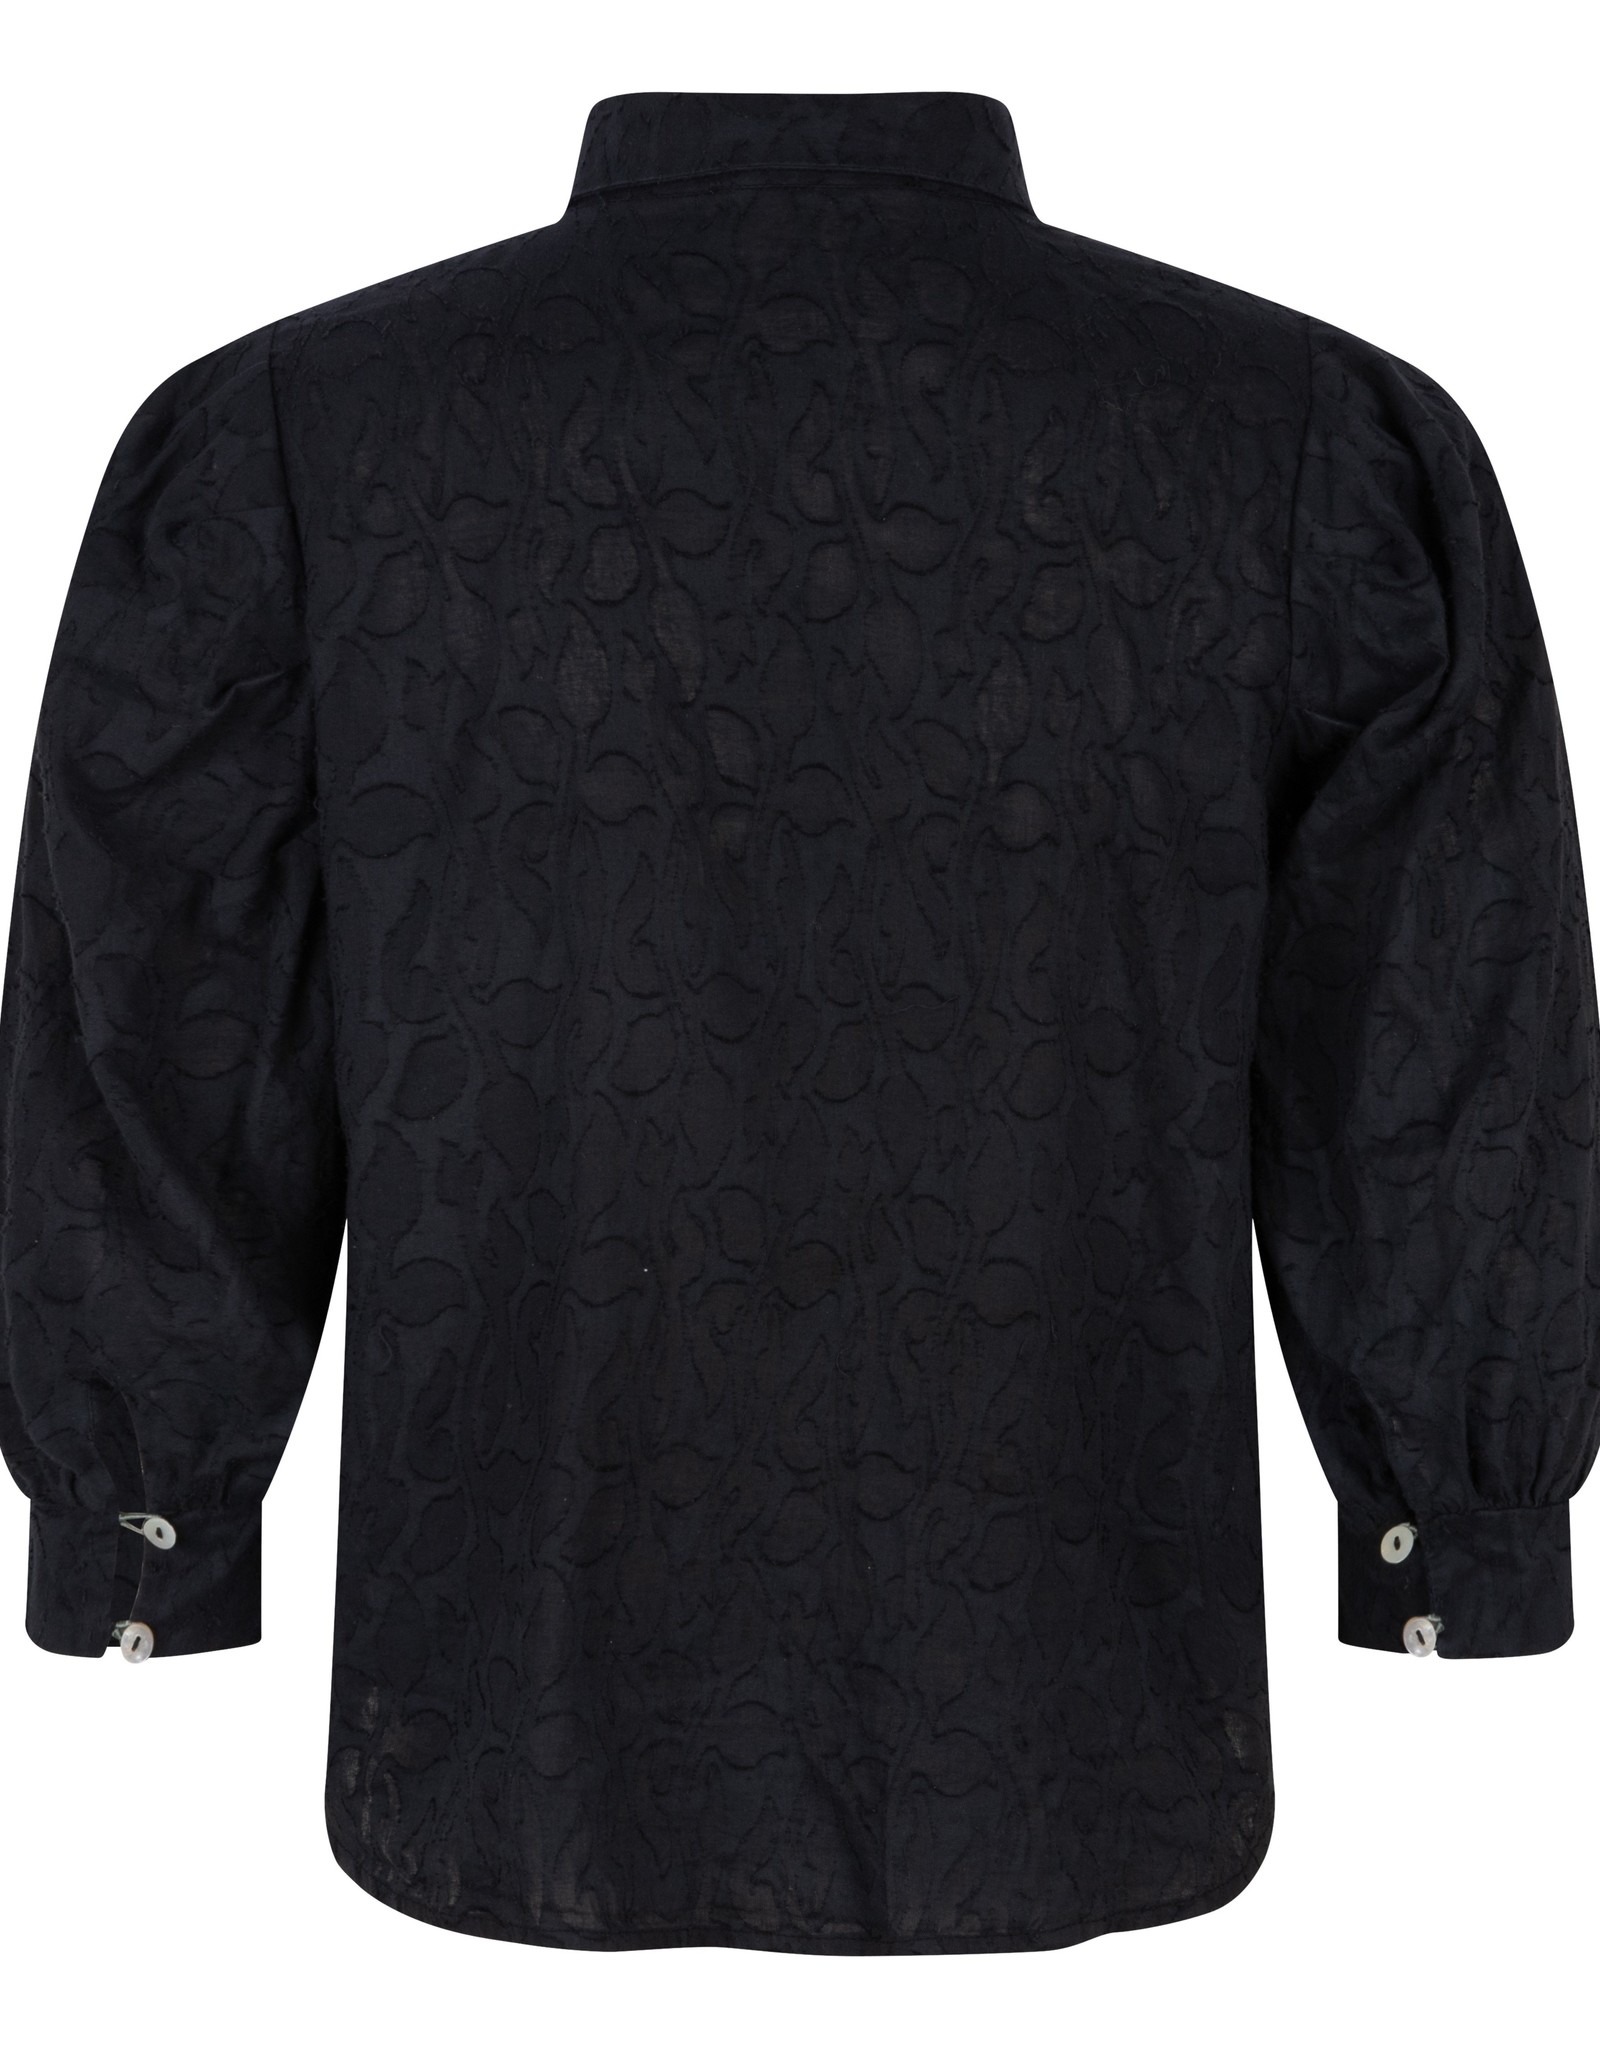 Ruby Tuesday Imma jacquard blouse half sleeves BLACK